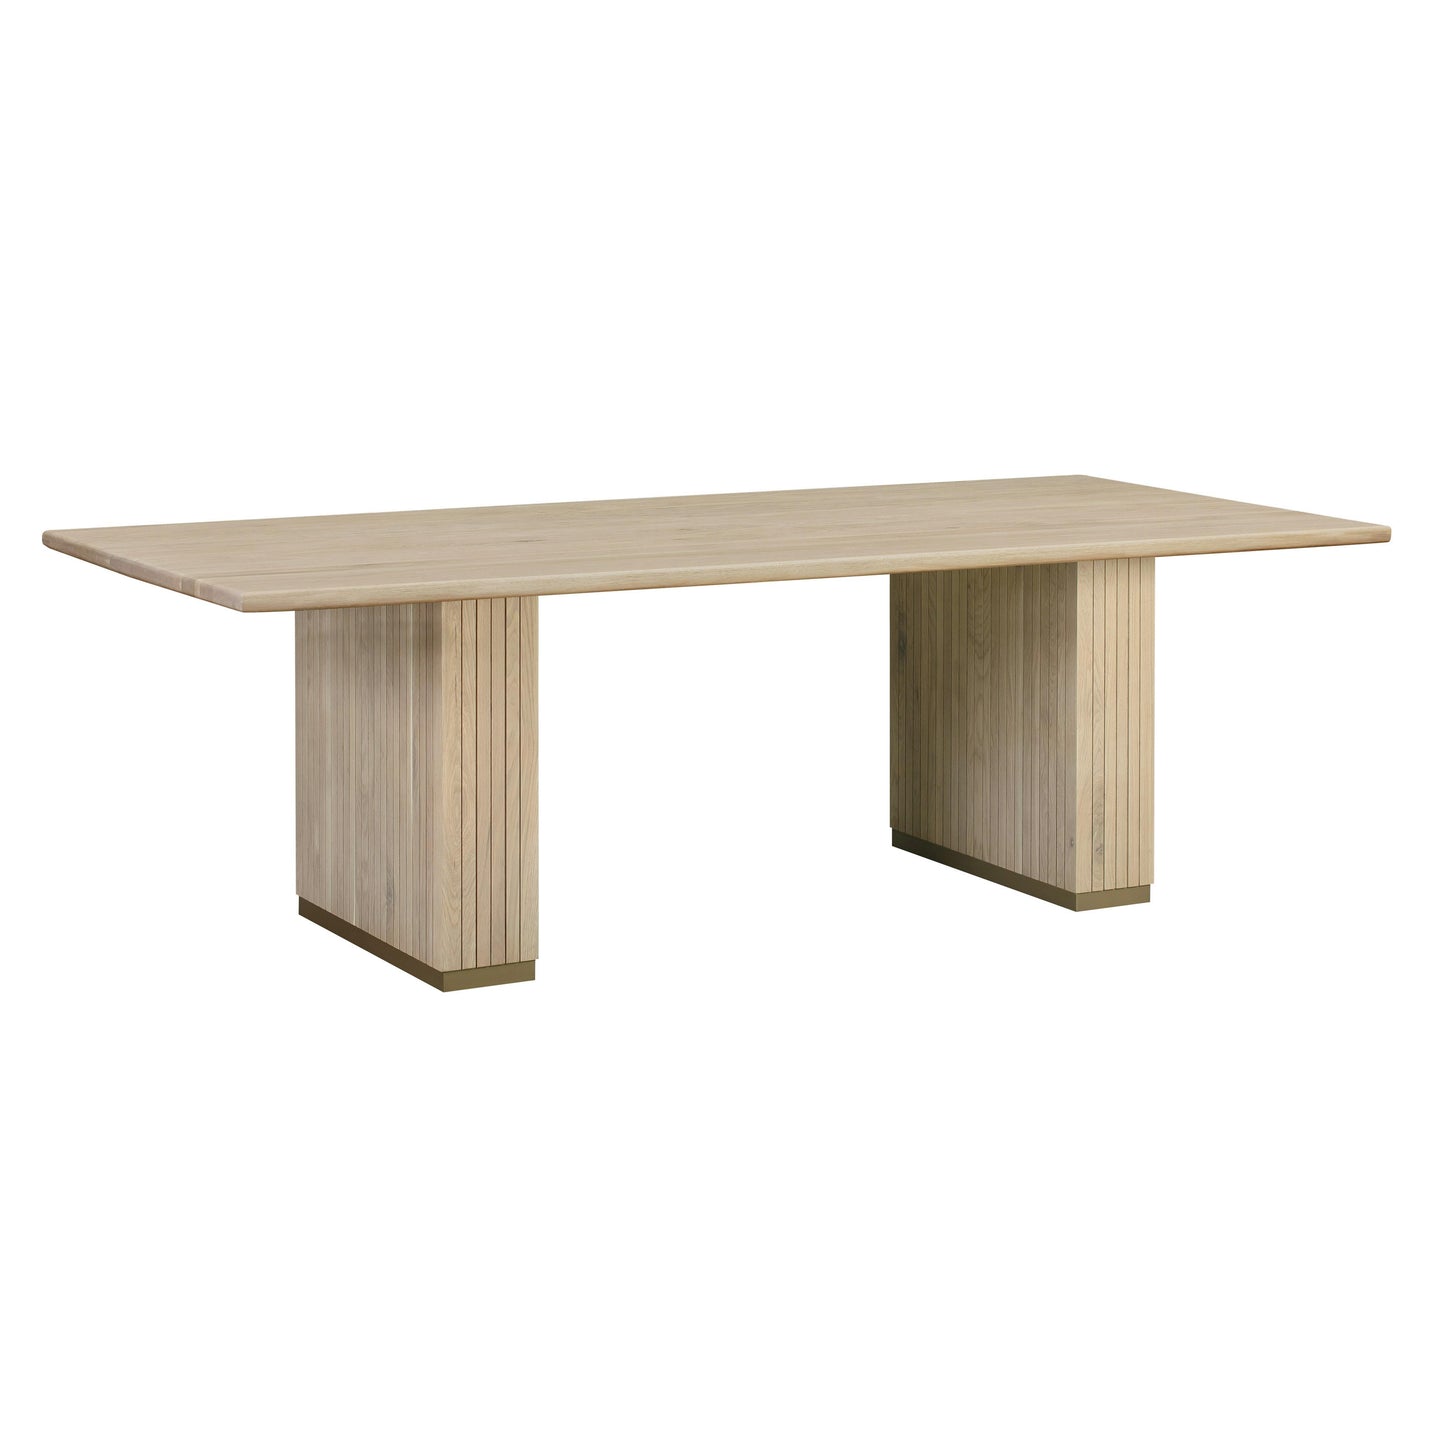 Tov Furniture Chelsea Ash Wood Rectangular Dining Table